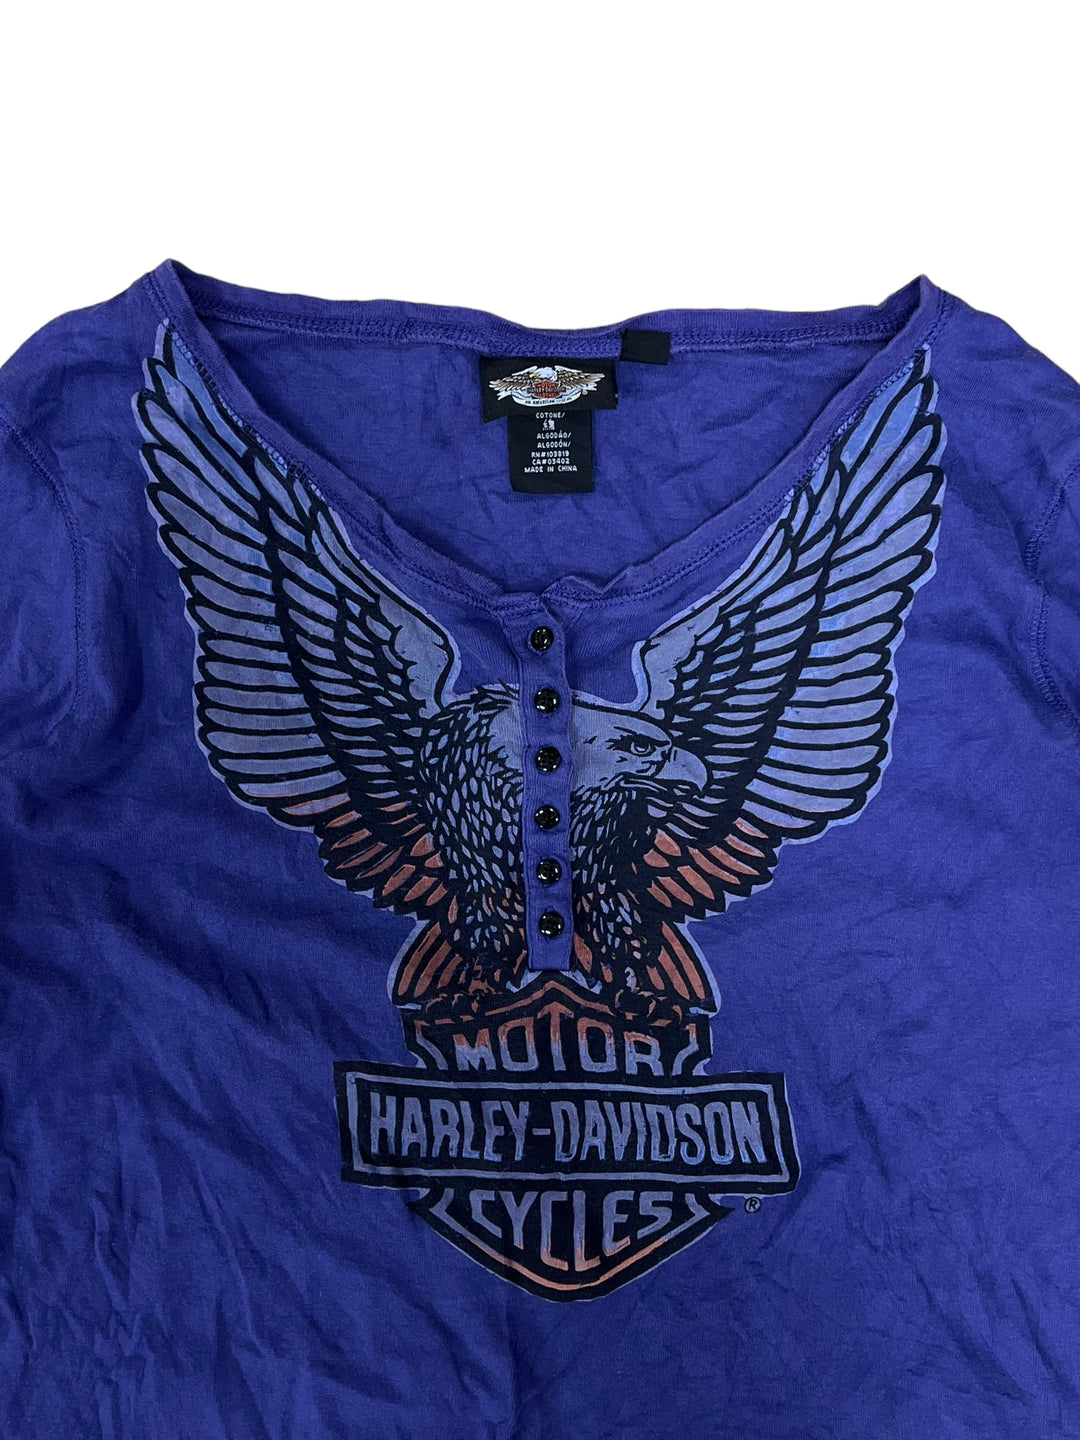 Harley-Davidson button up long sleeve shirt women’s extra large